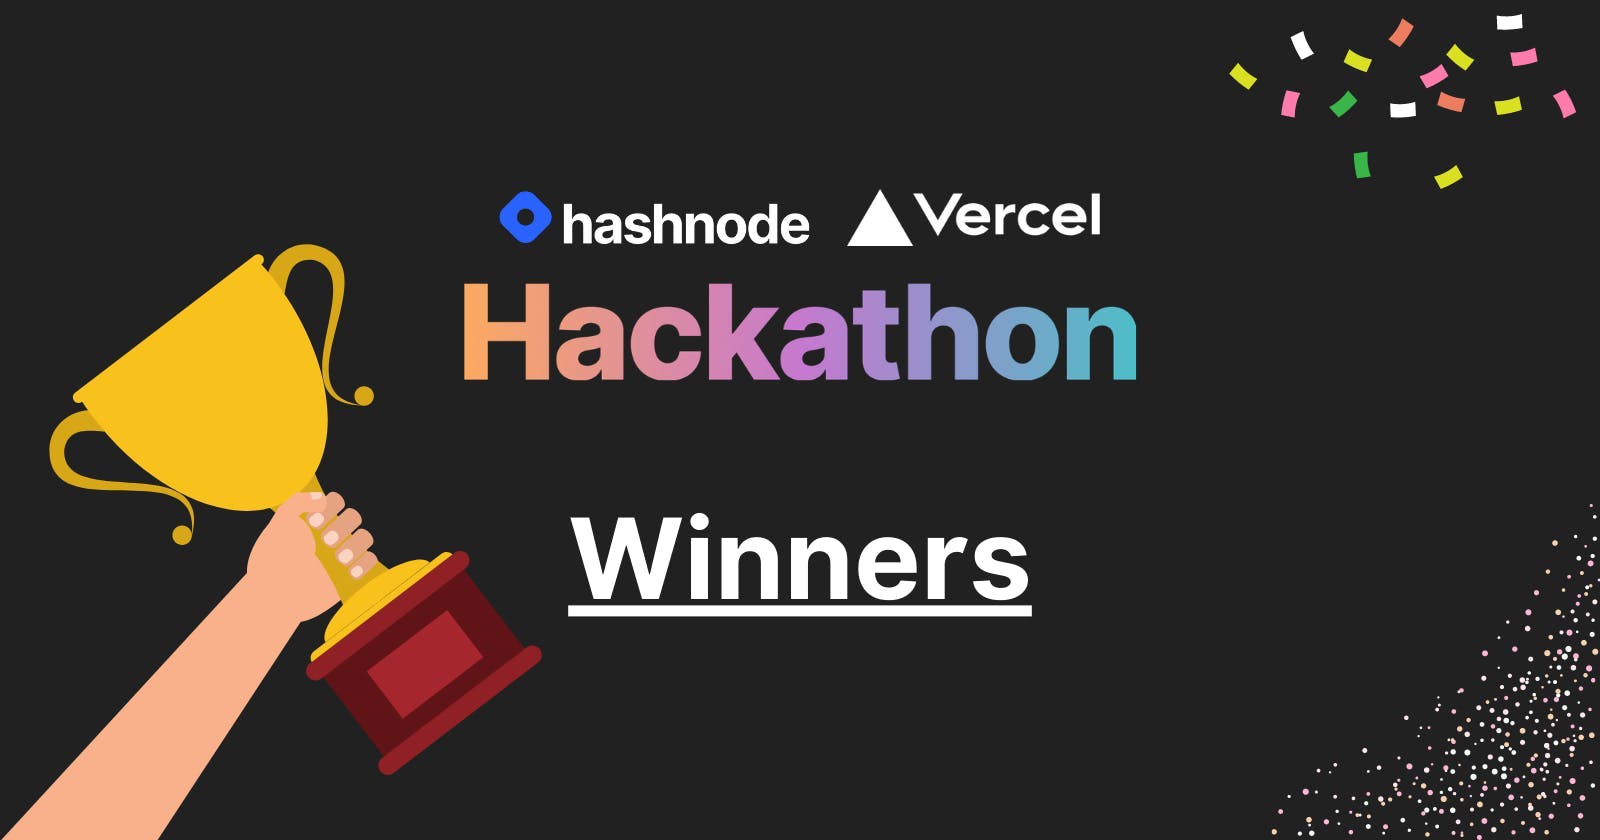 Vercel Hashnode hackathon